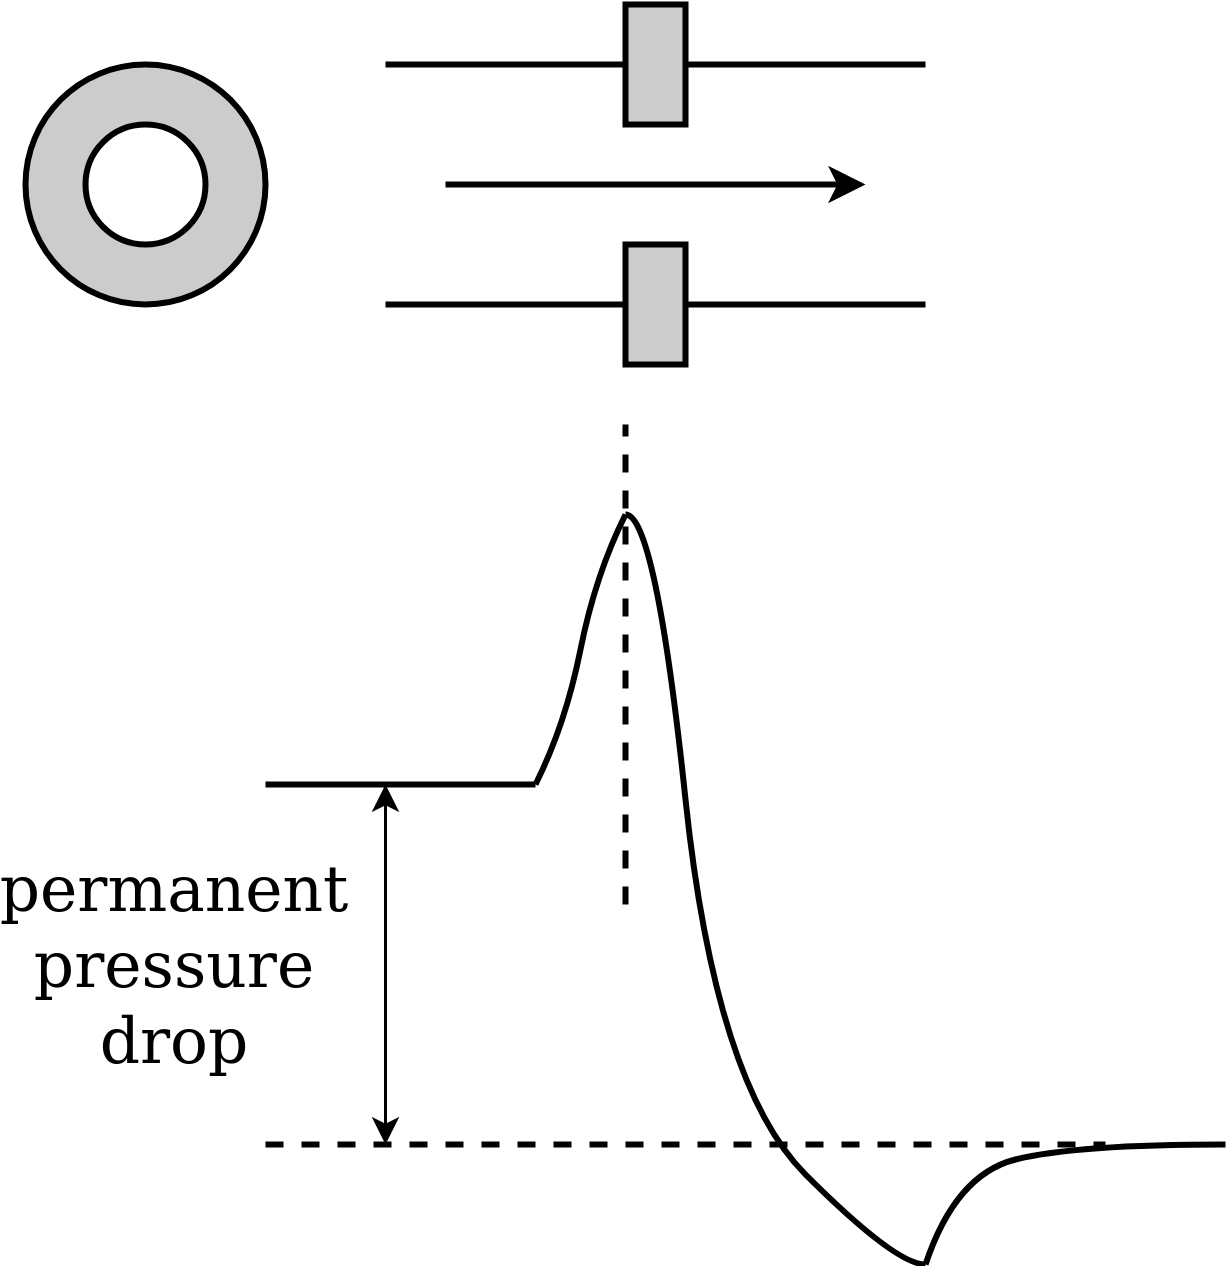 Orifice plate and permanent pressure drop